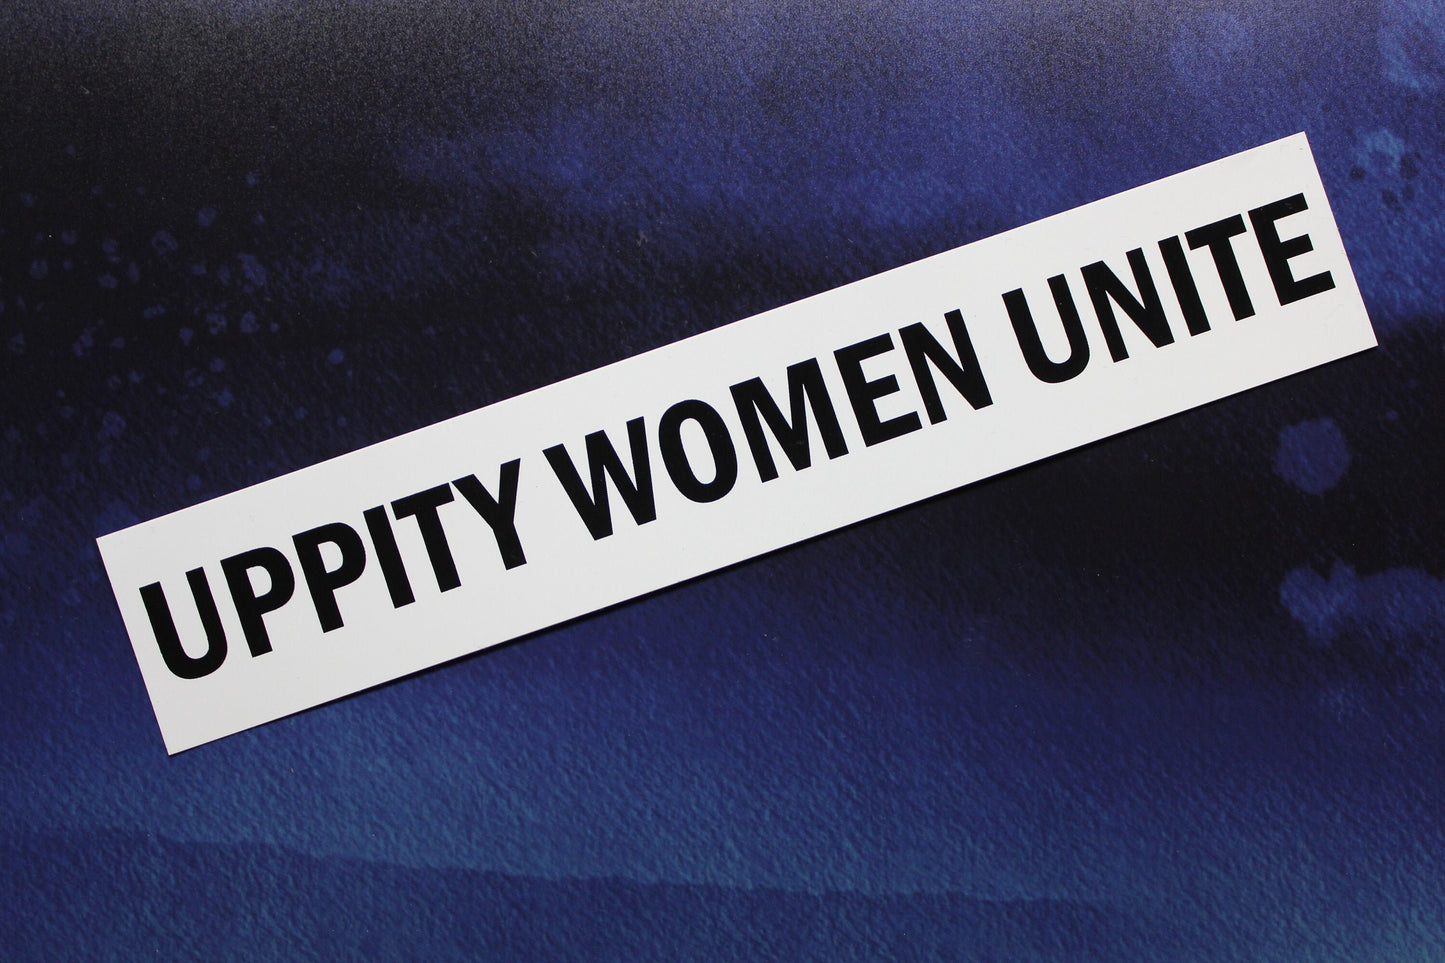 Uppity Women Unite Vinyl Vinyl Bumper Sticker Political Liberal Car Laptop Resistance